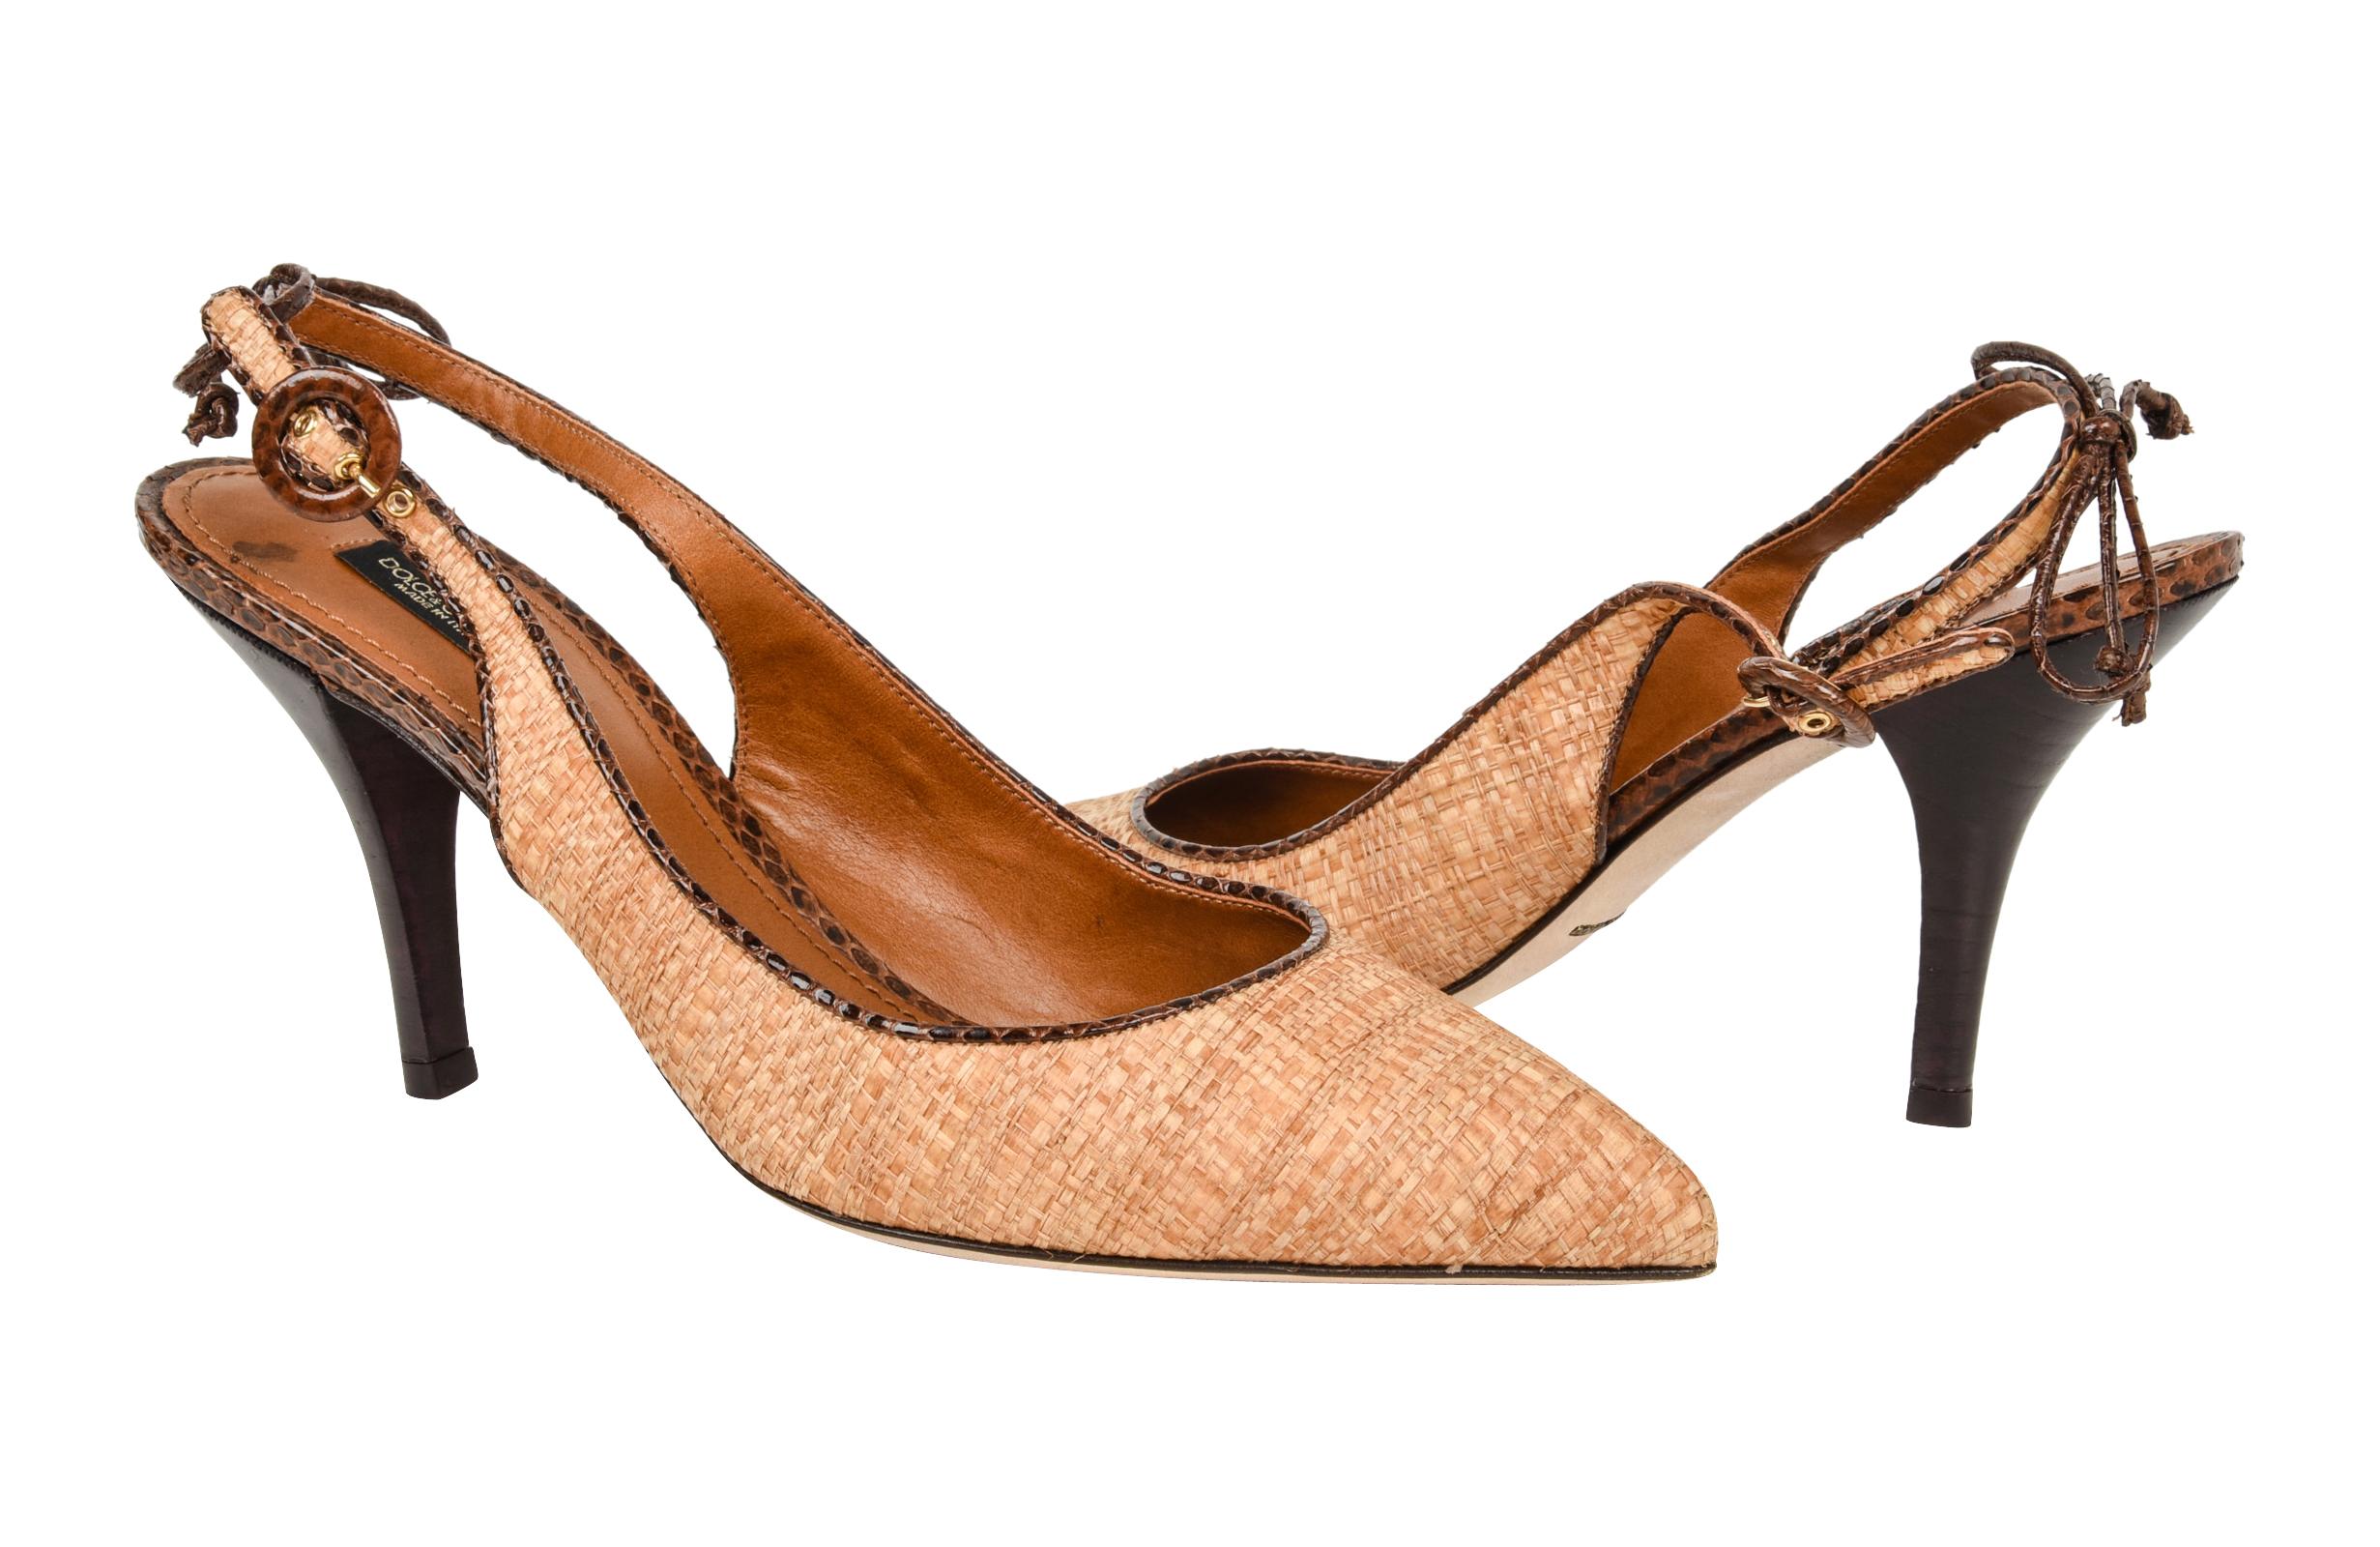 Beige Dolce&Gabbana Shoe Woven Hemp / Raffia Lizard Details 40.5/ 10.5 